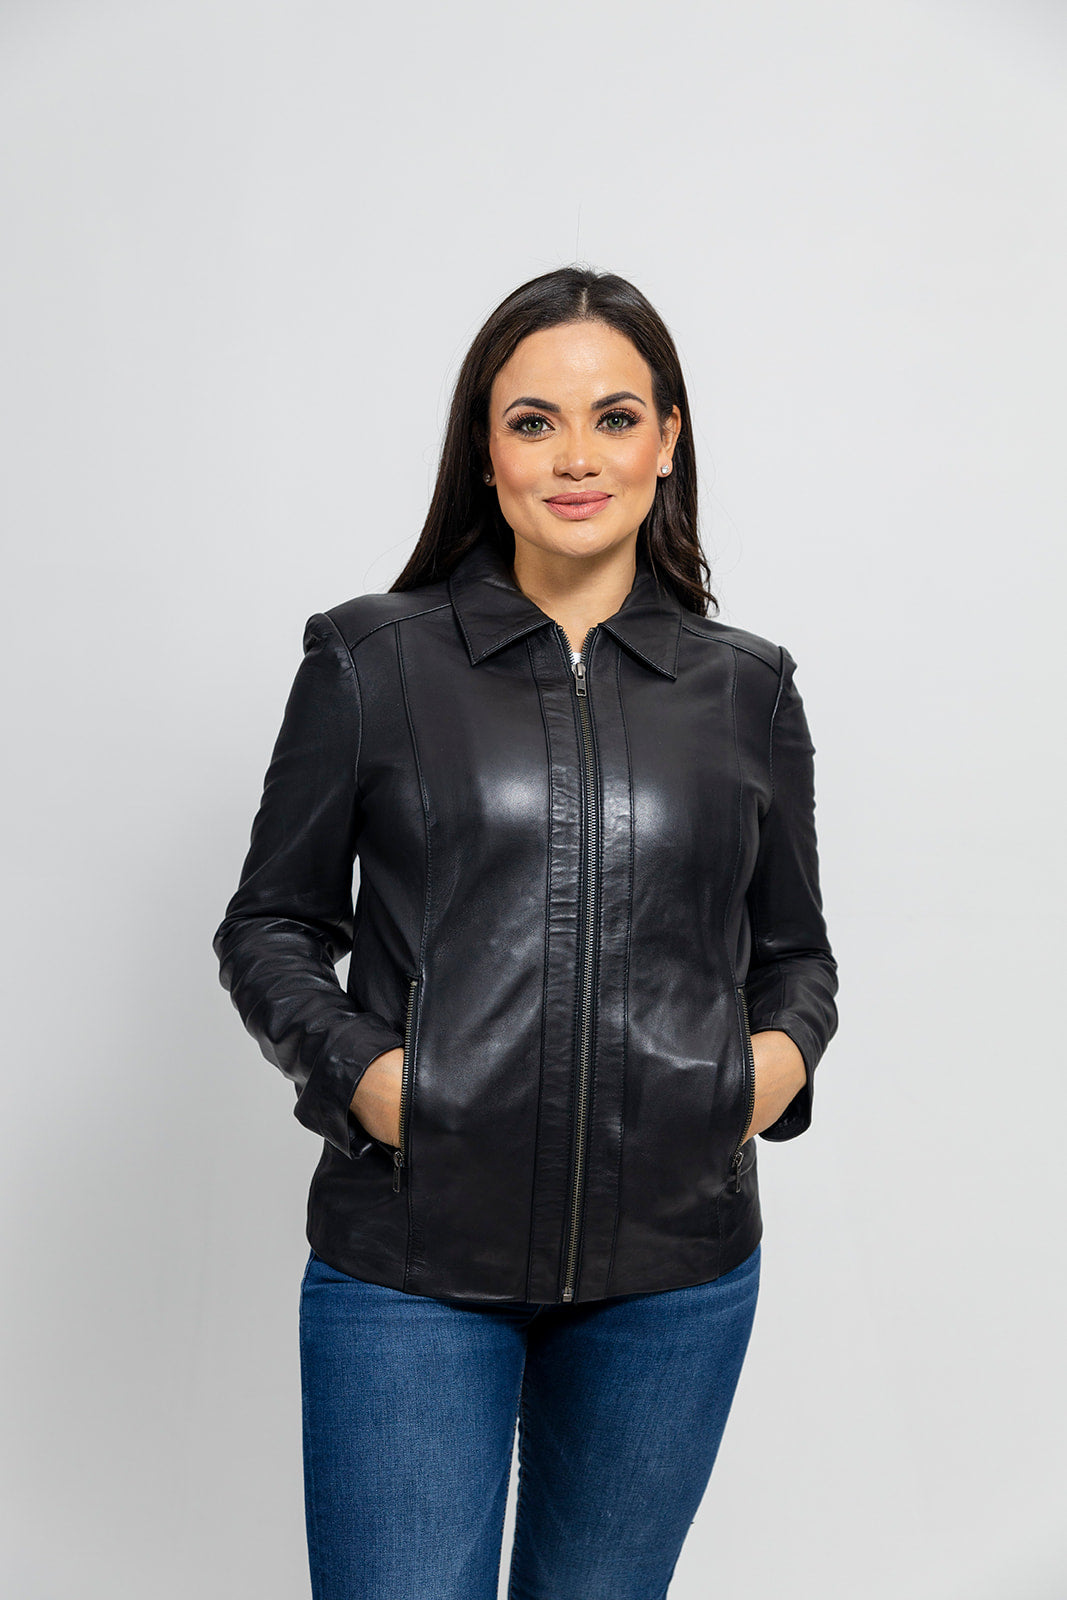 Patricia Womens Fashion Leather Jacket Women's Leather Jacket Whet Blu NYC   